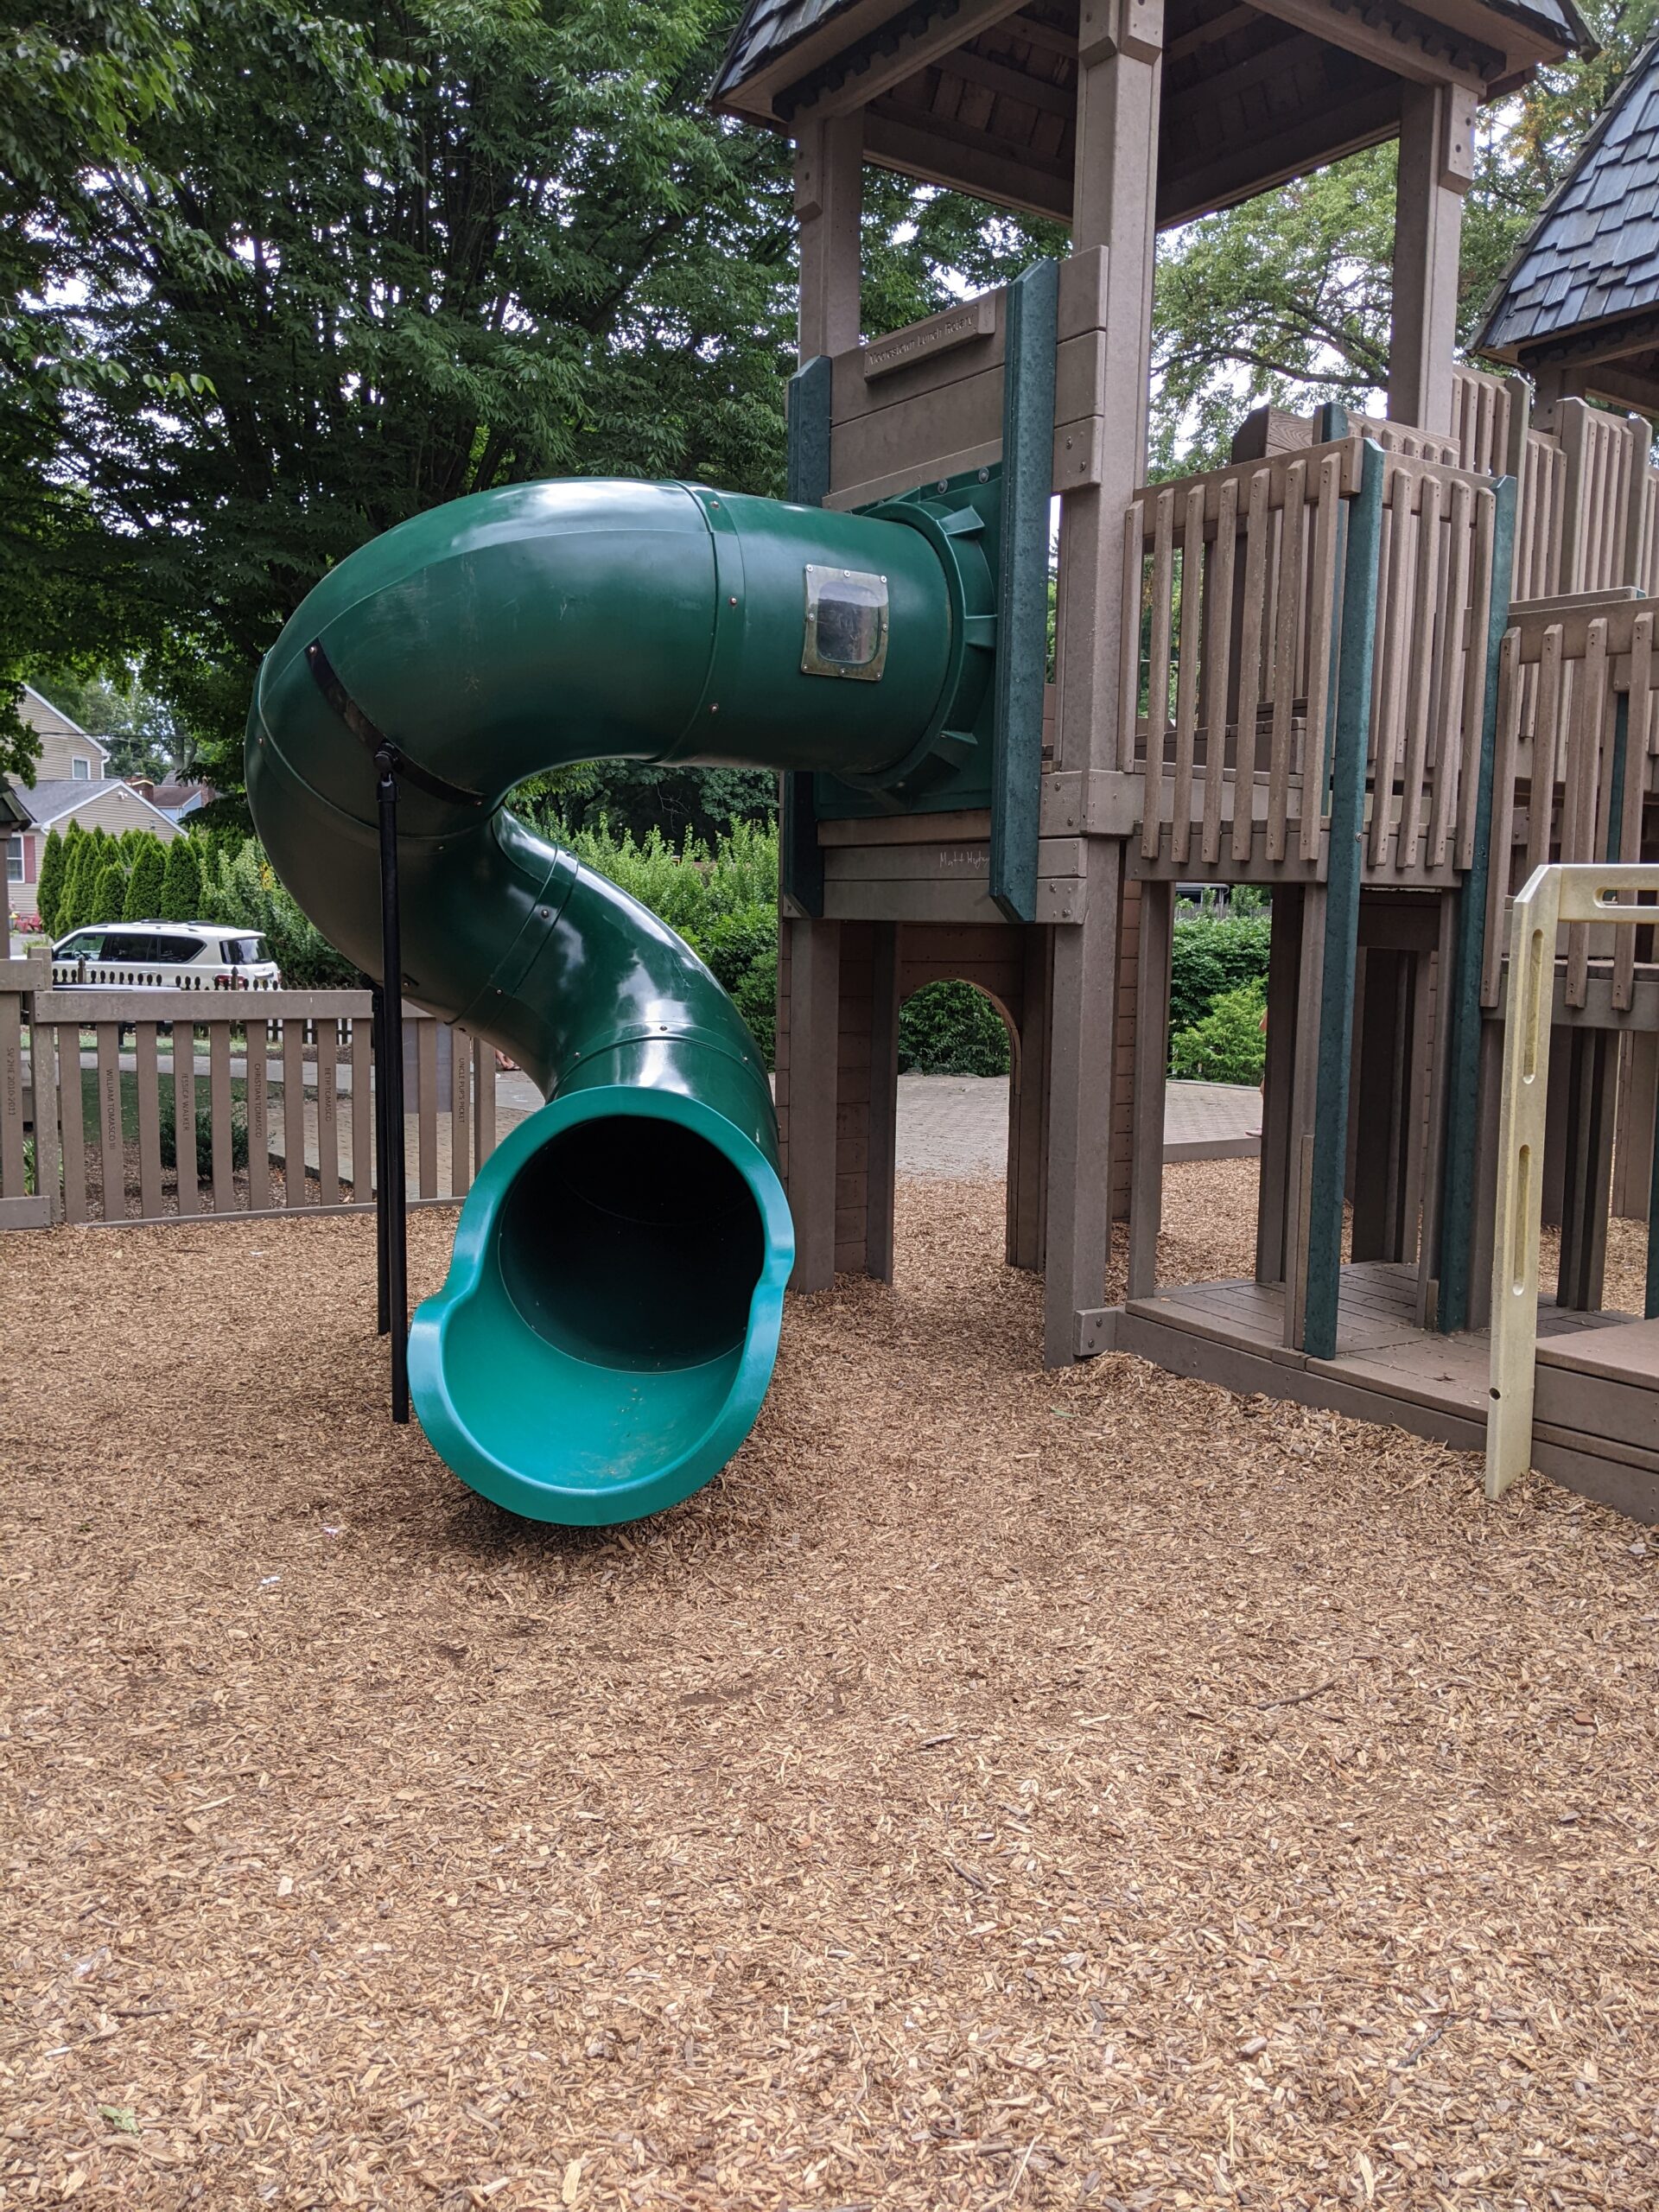 Frank Fullerton Memorial Park Playground in Moorestown NJ - SLIDES - Twisting tunnel slide